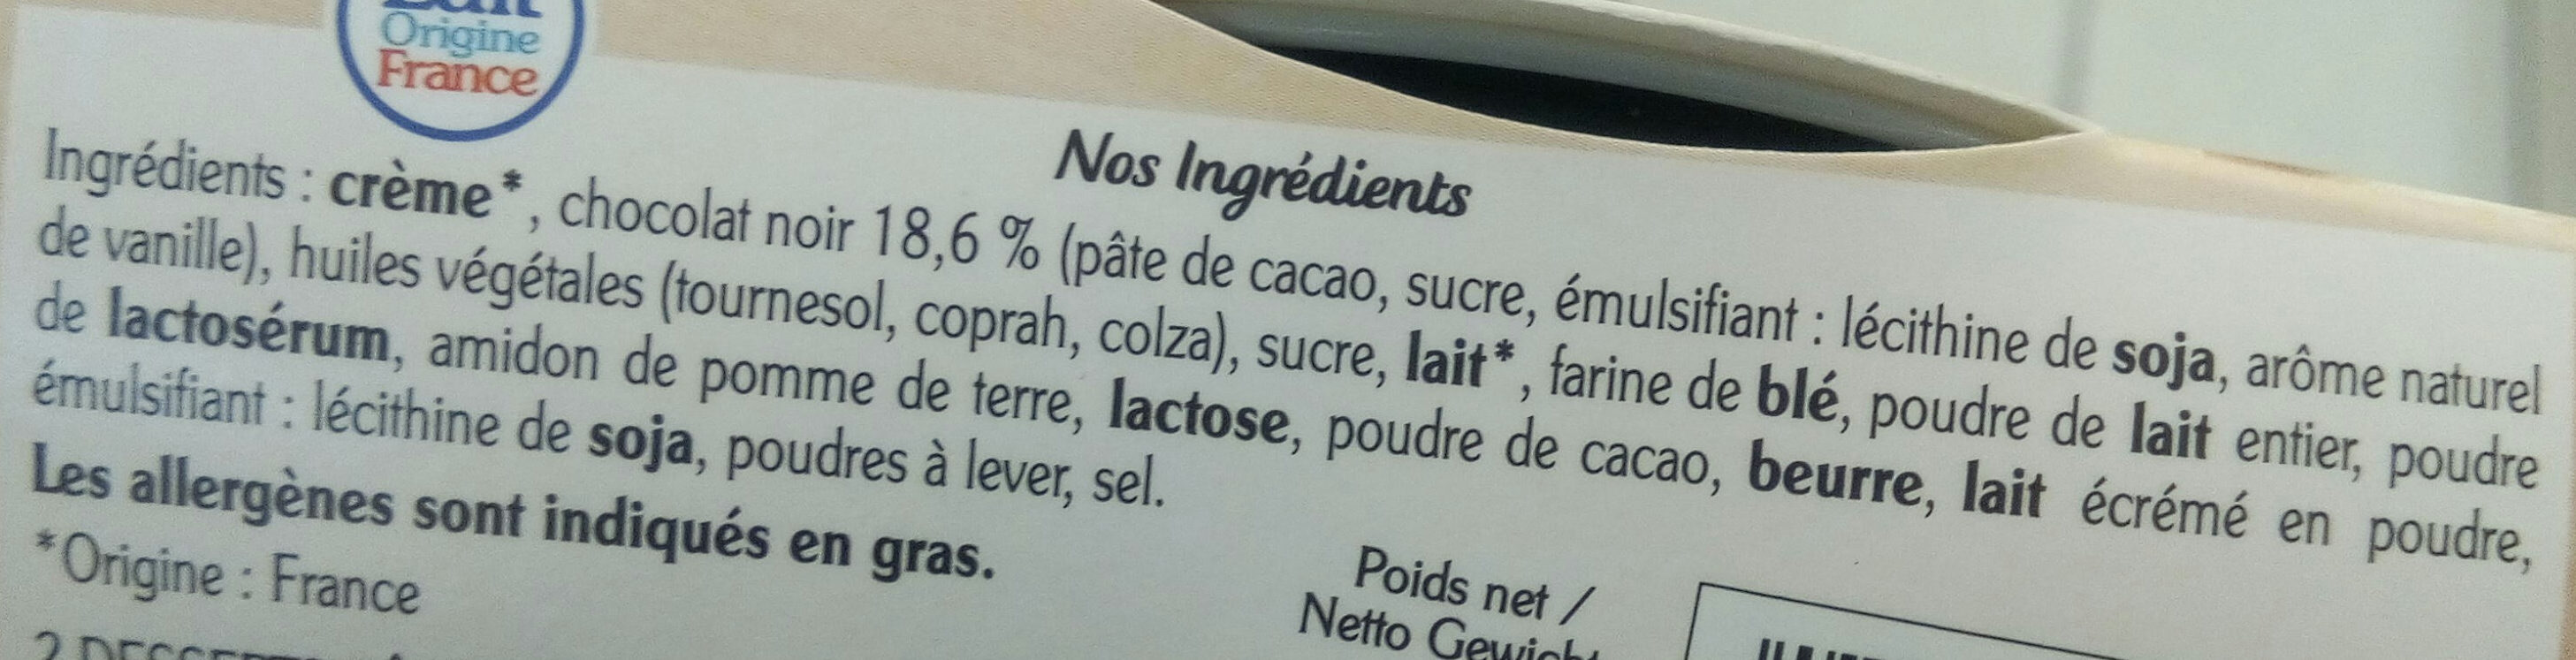 La Tartelette au Chocolat - Ingredients - fr